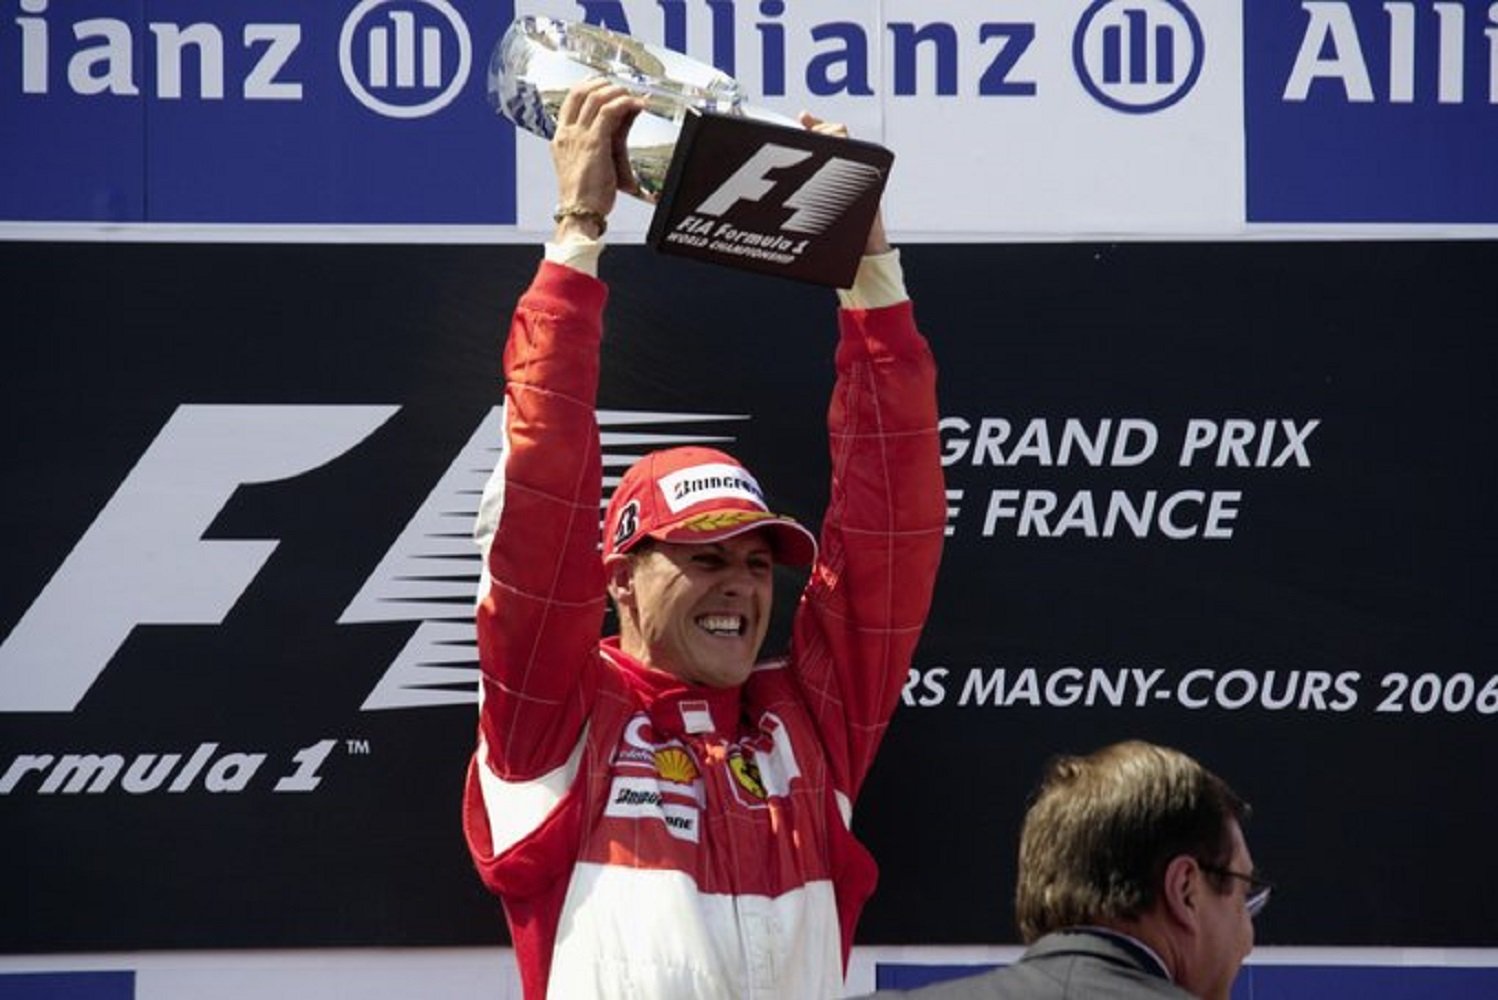 El exjefe de Ferrari confirma la mejora de salud de Michael Schumacher